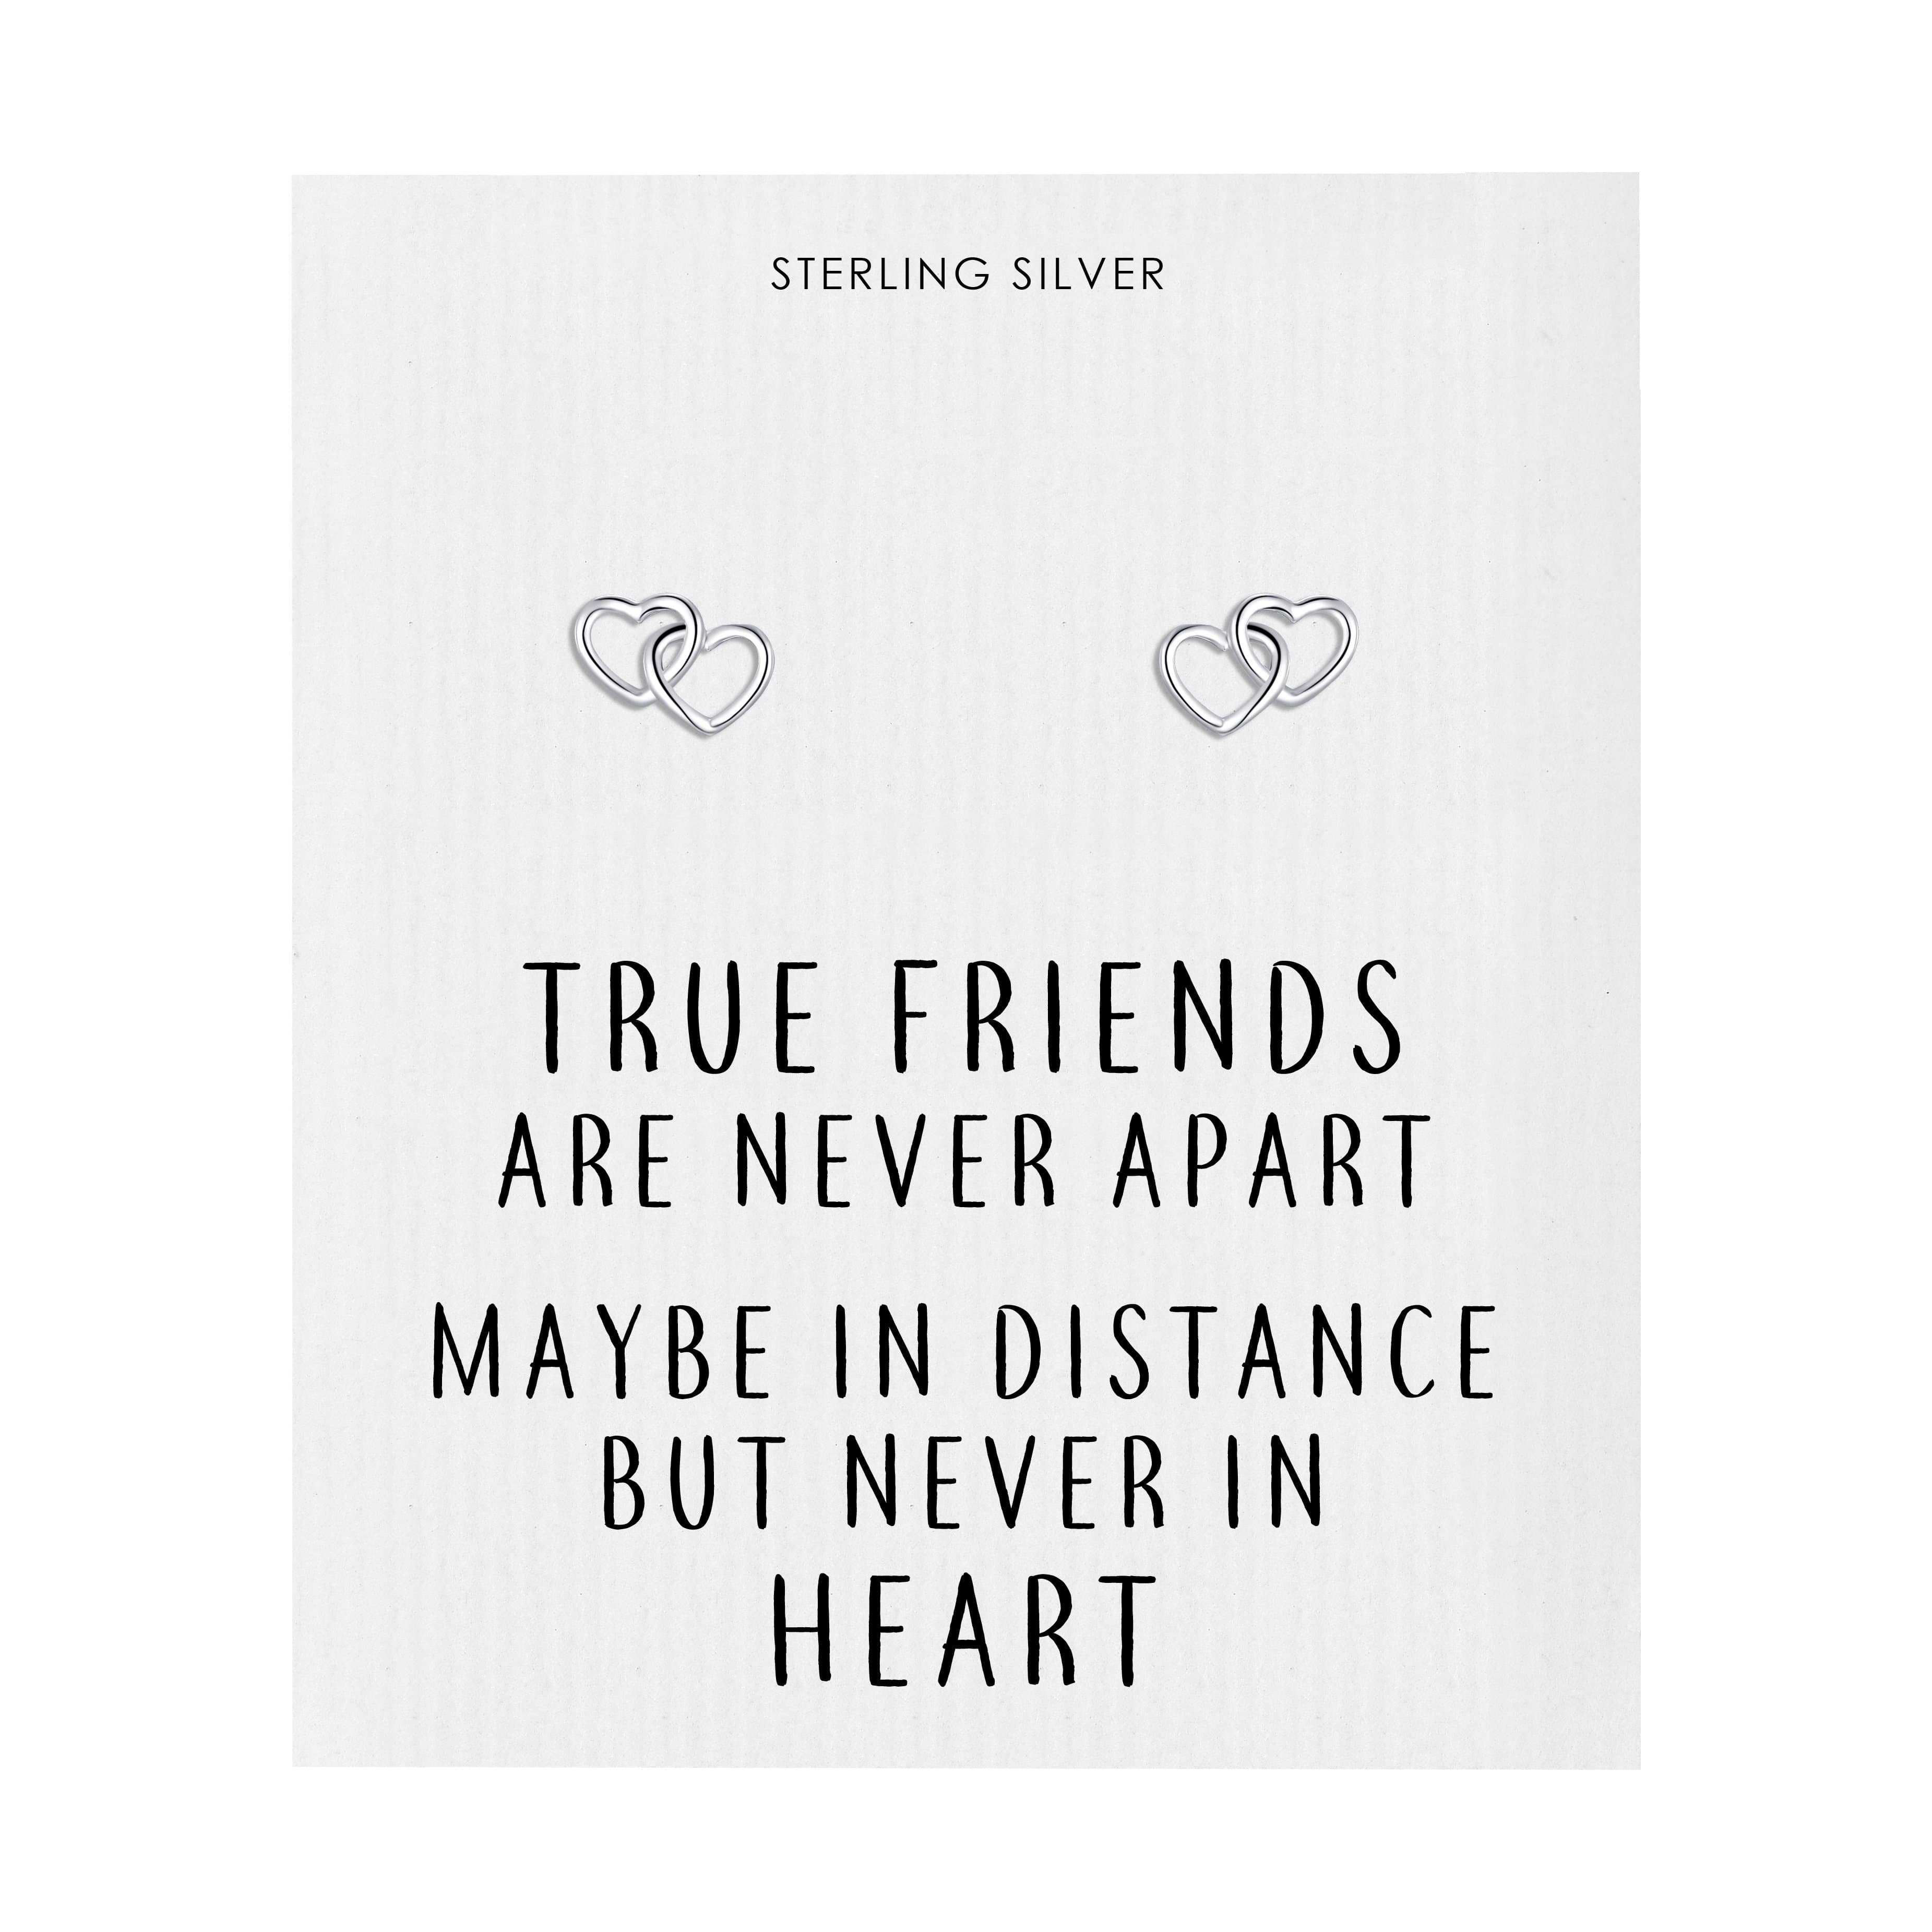 Sterling Silver True Friends Heart Link Earrings with Quote Card by Philip Jones Jewellery